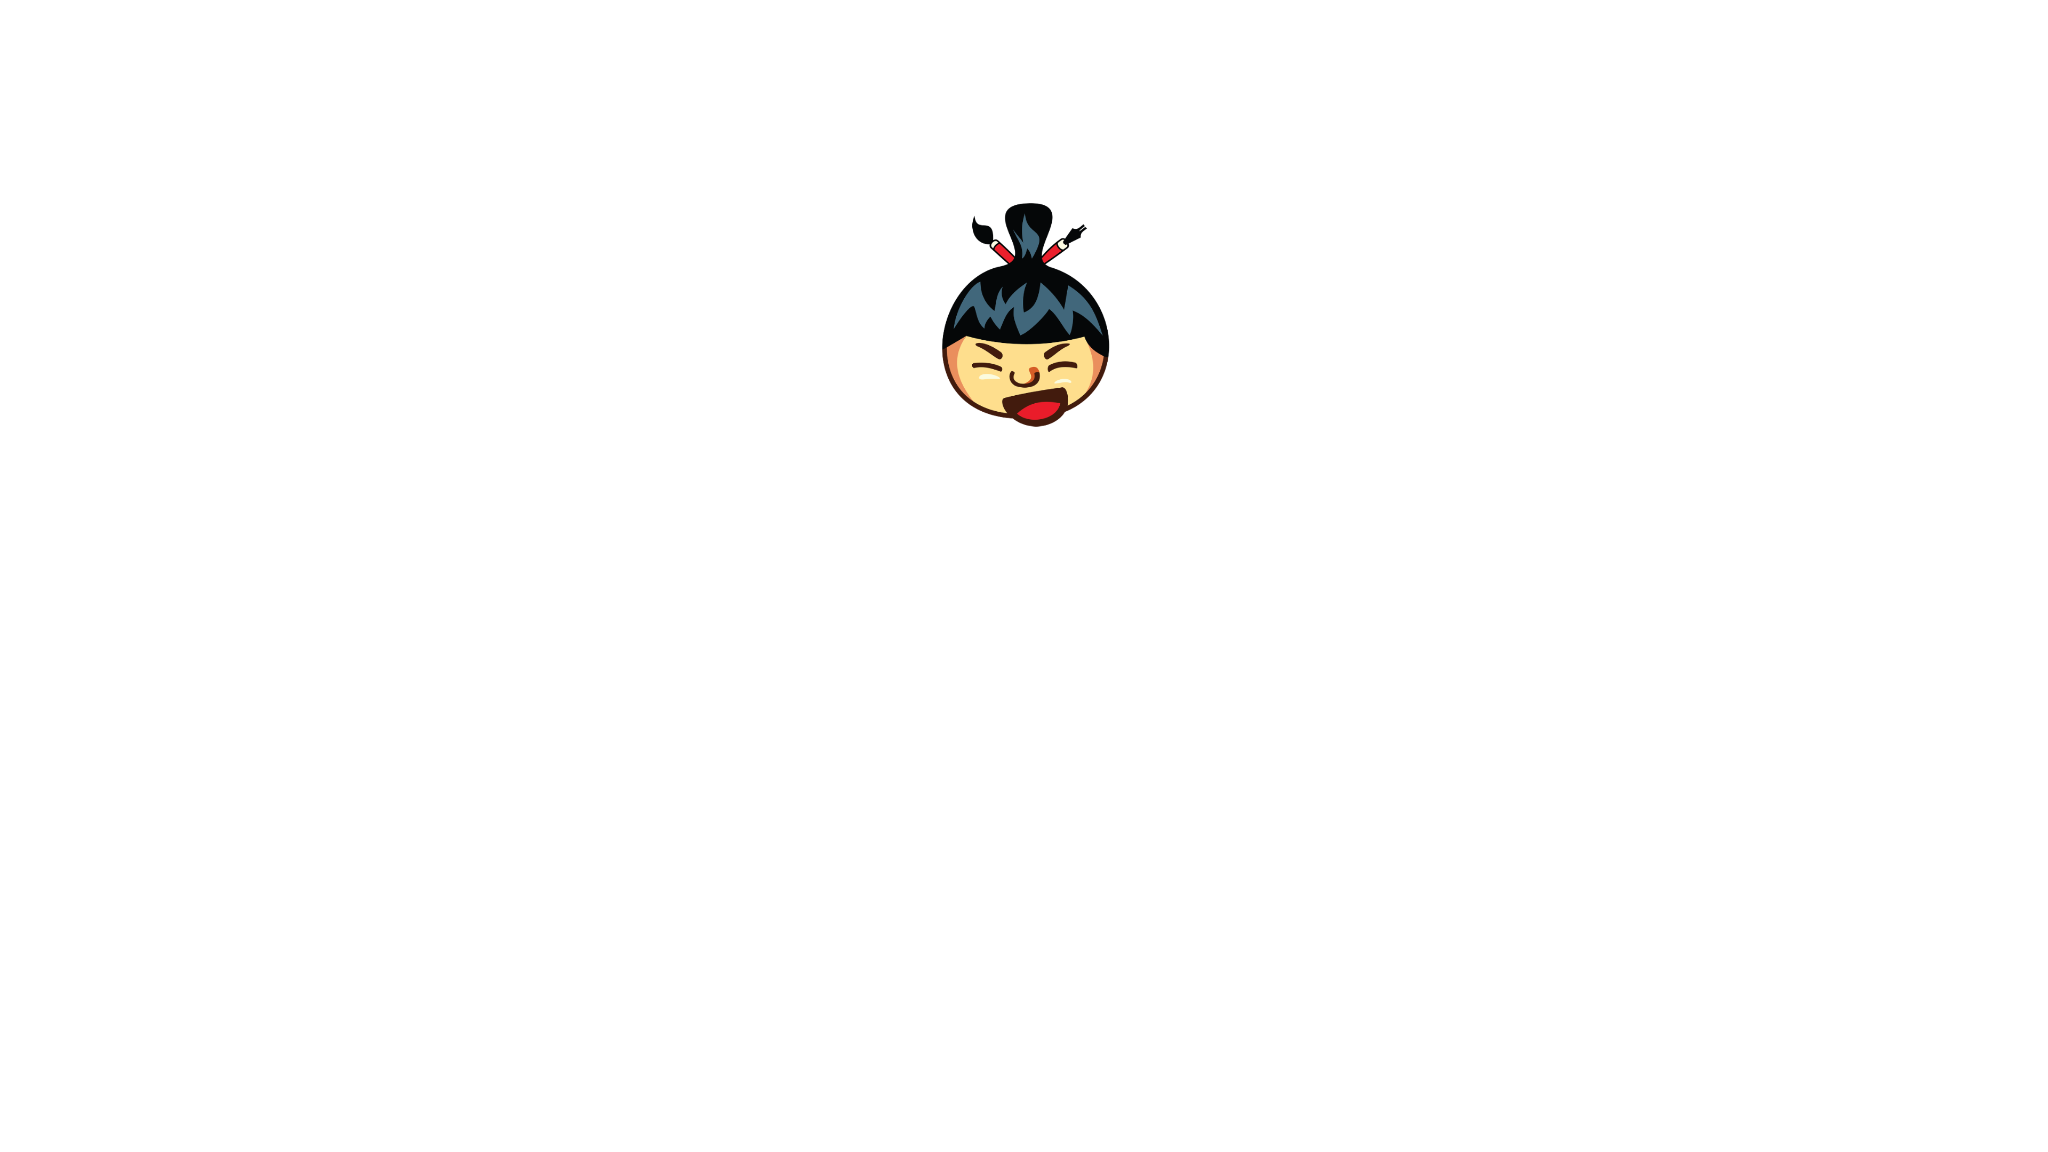 Sumo Video Intro - تم إنشاؤها بواسطة Lauri Koutaniemi مع paint